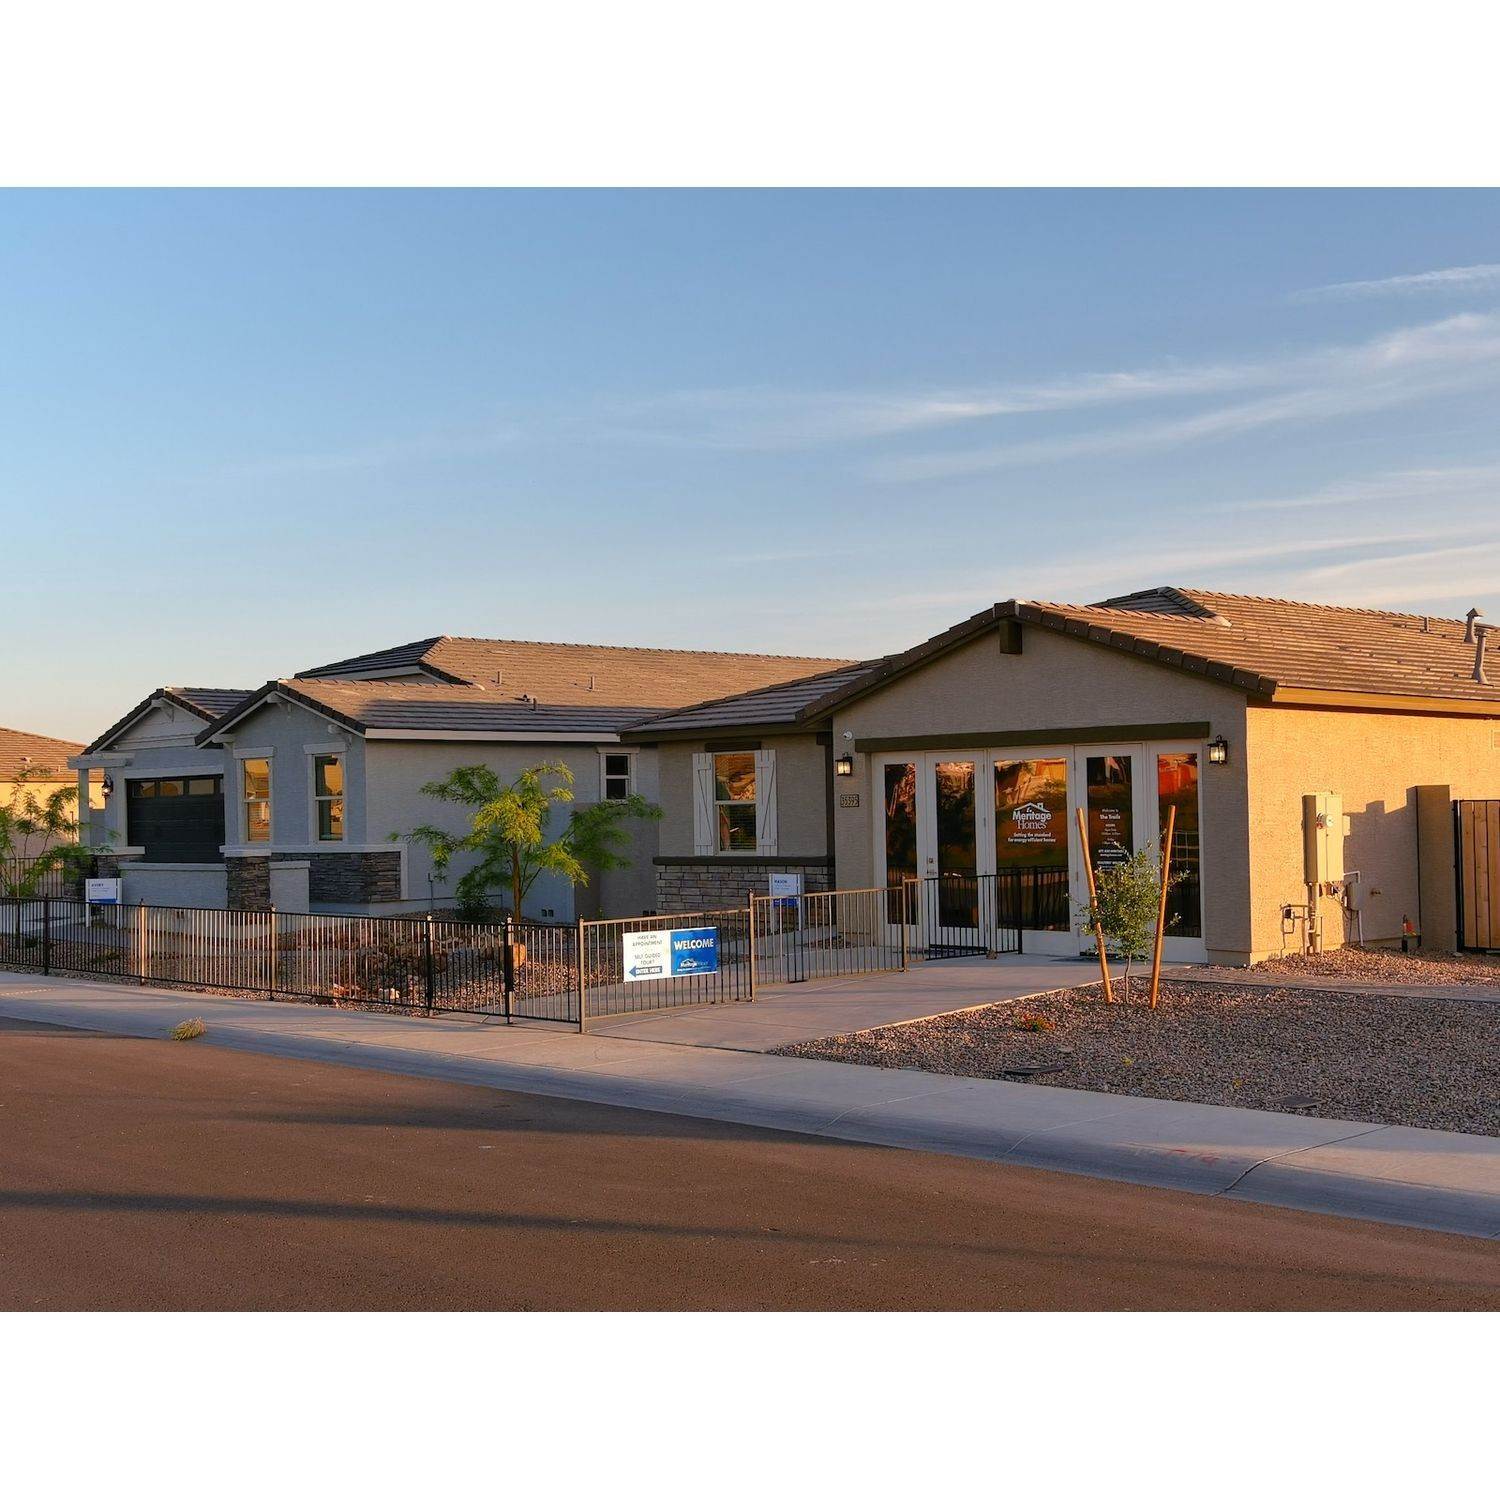 2. The Trails - Estate Series building at 35395 W Catalan Street, Maricopa, AZ 85138